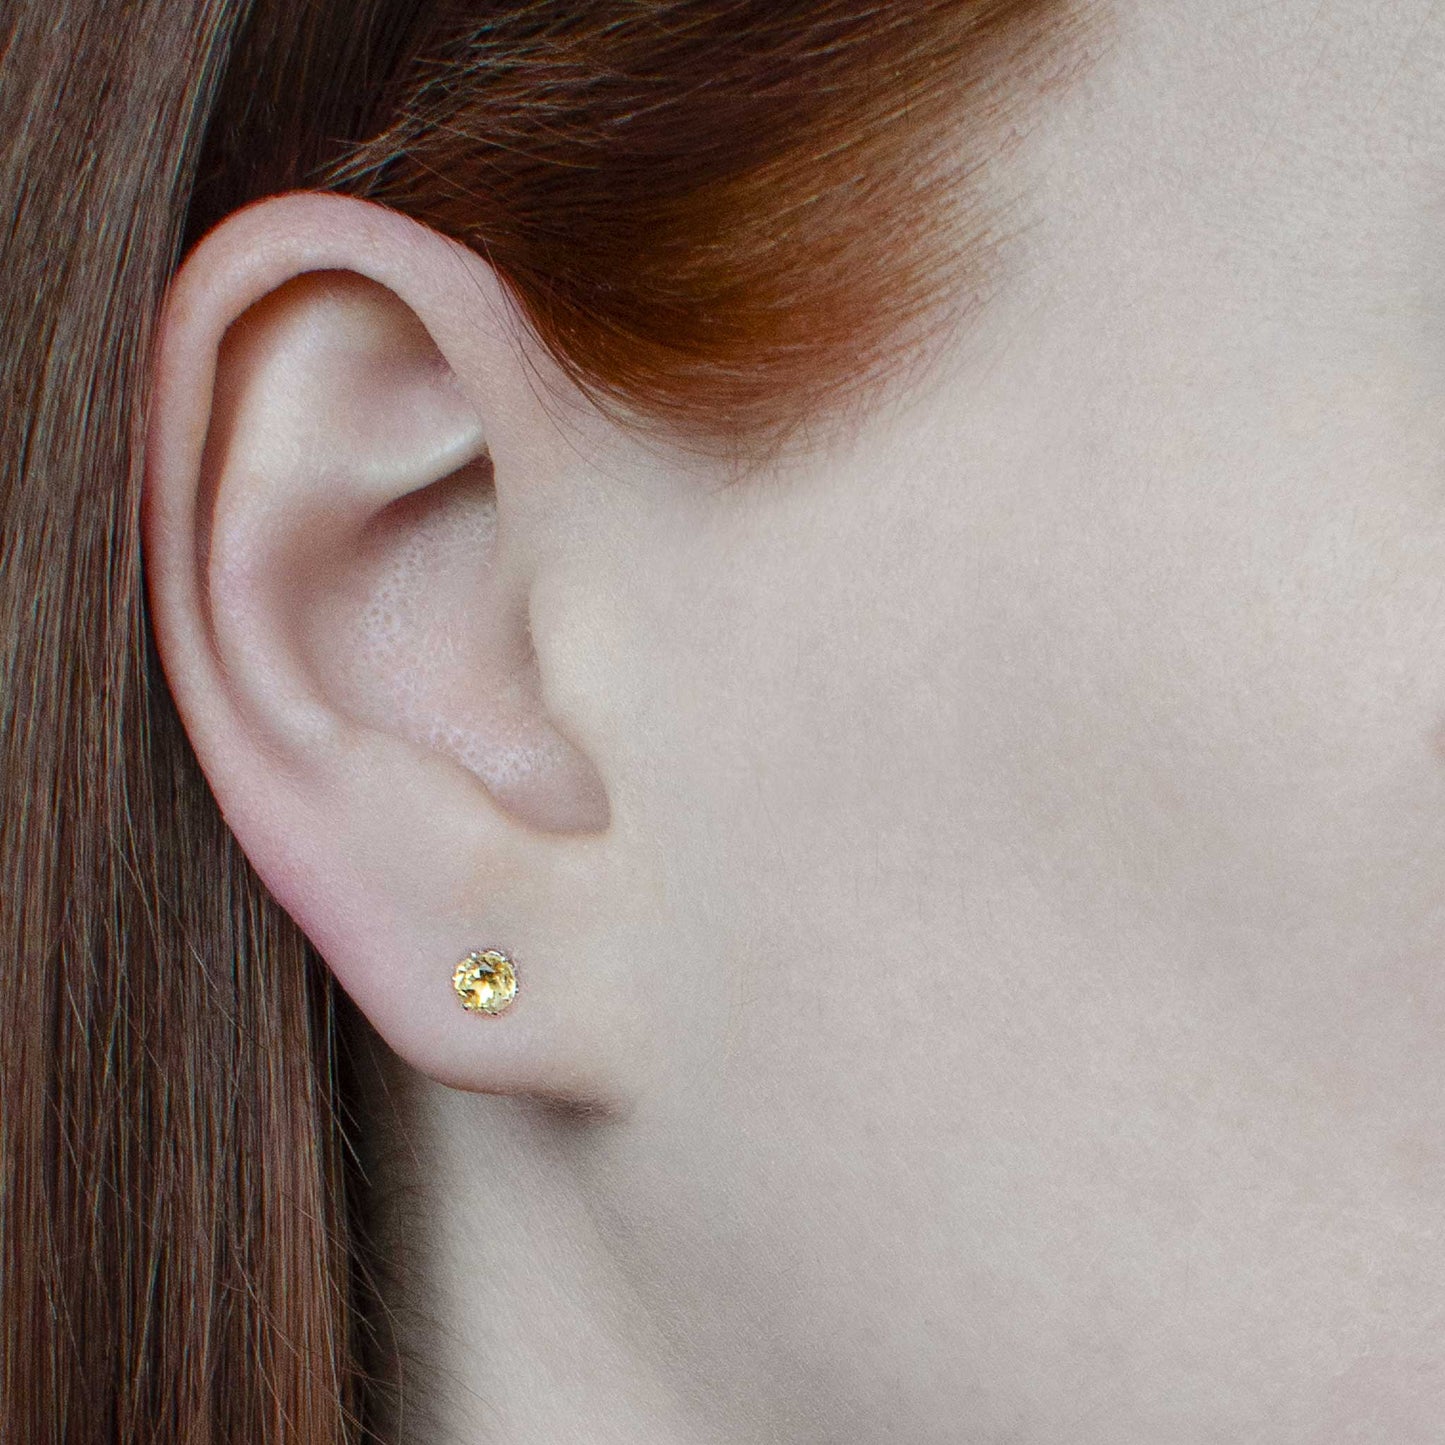 Woman wearing tiny yellow Citrine stud earrings in earlobe